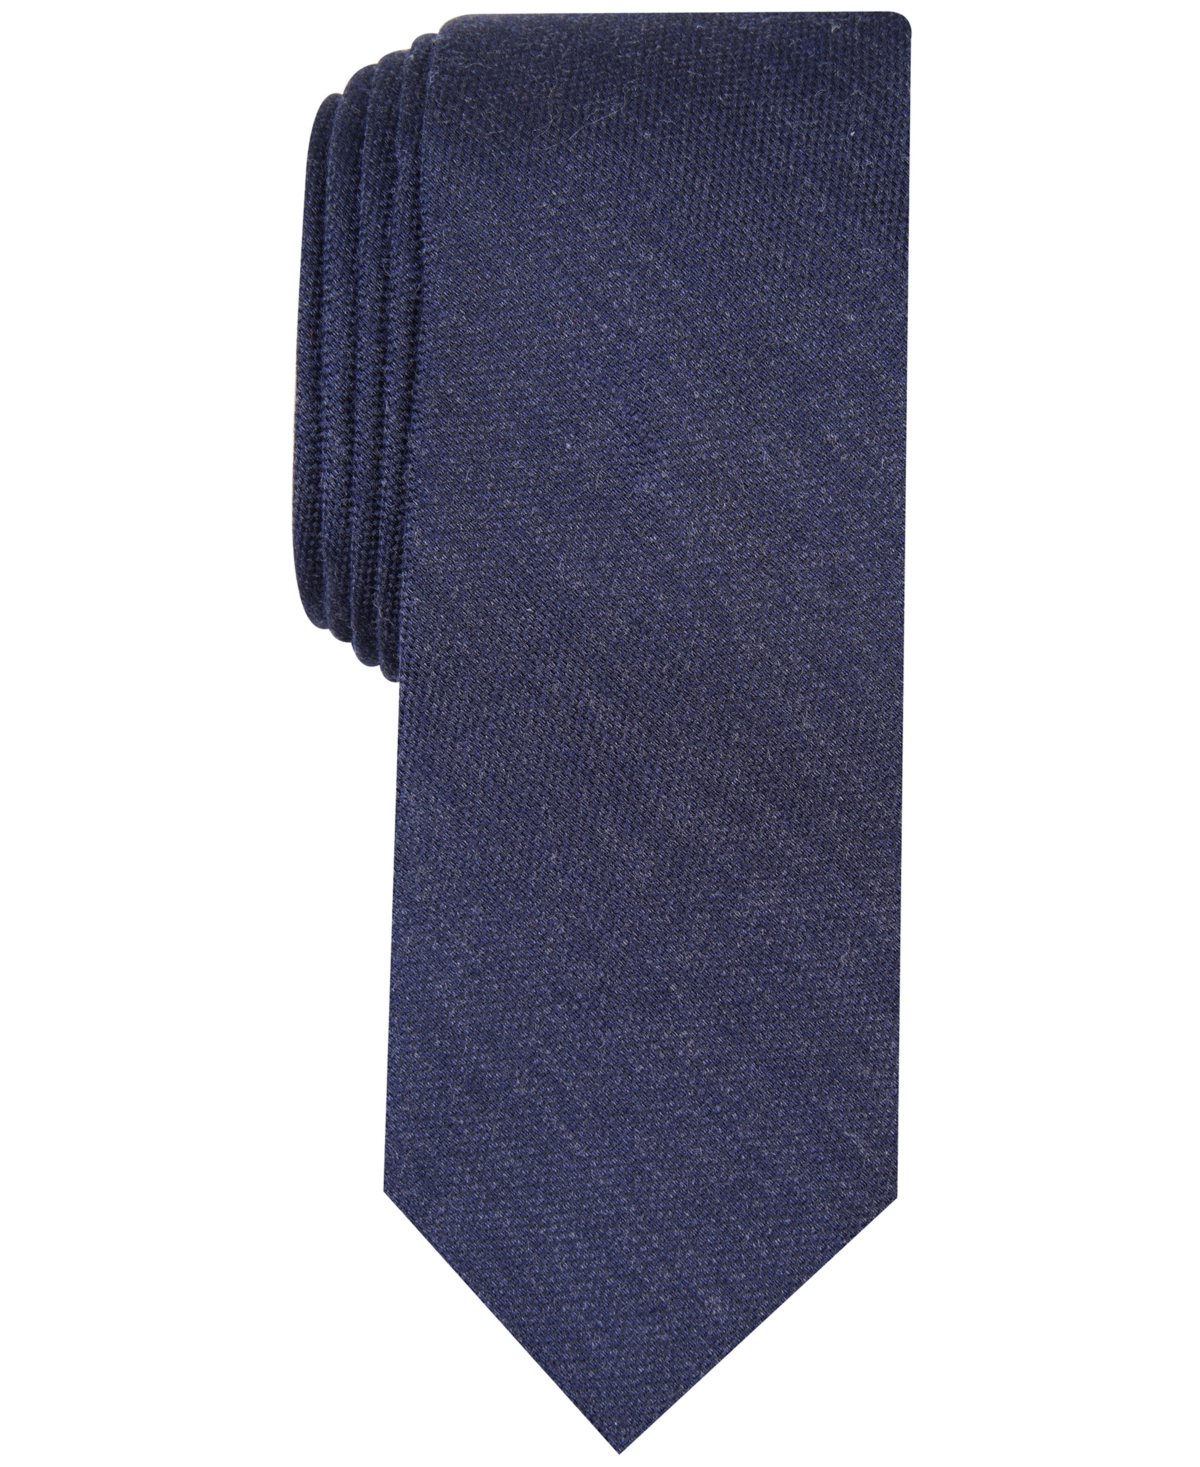 Men's Dunbar Solid Slim Tie, Created for Macy's - Tomato